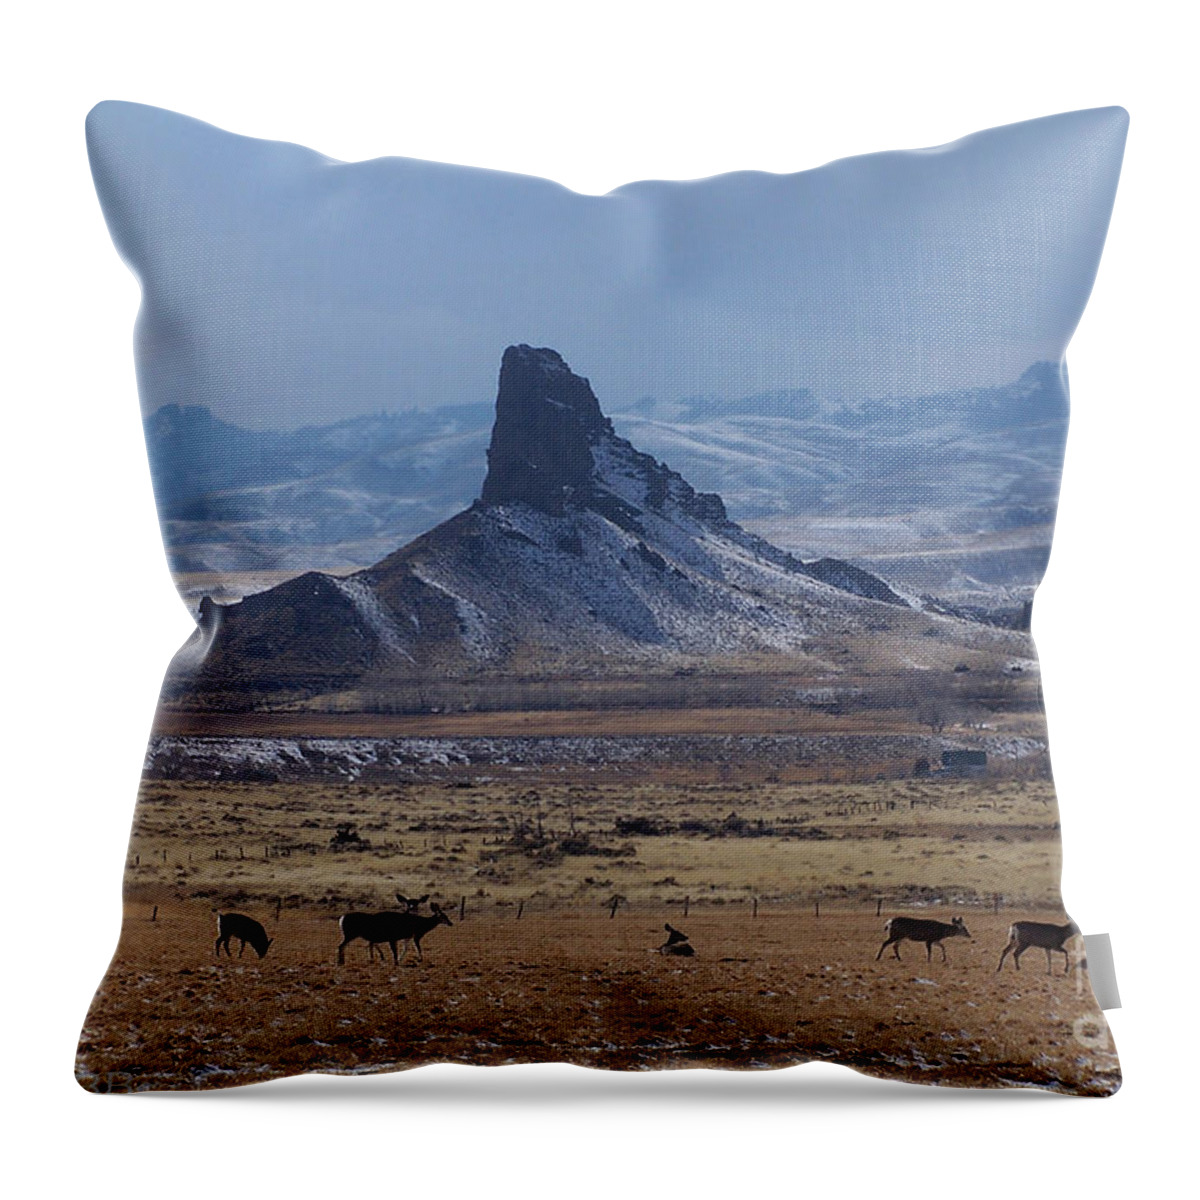 Deer Throw Pillow featuring the photograph Sentinels by Dorrene BrownButterfield